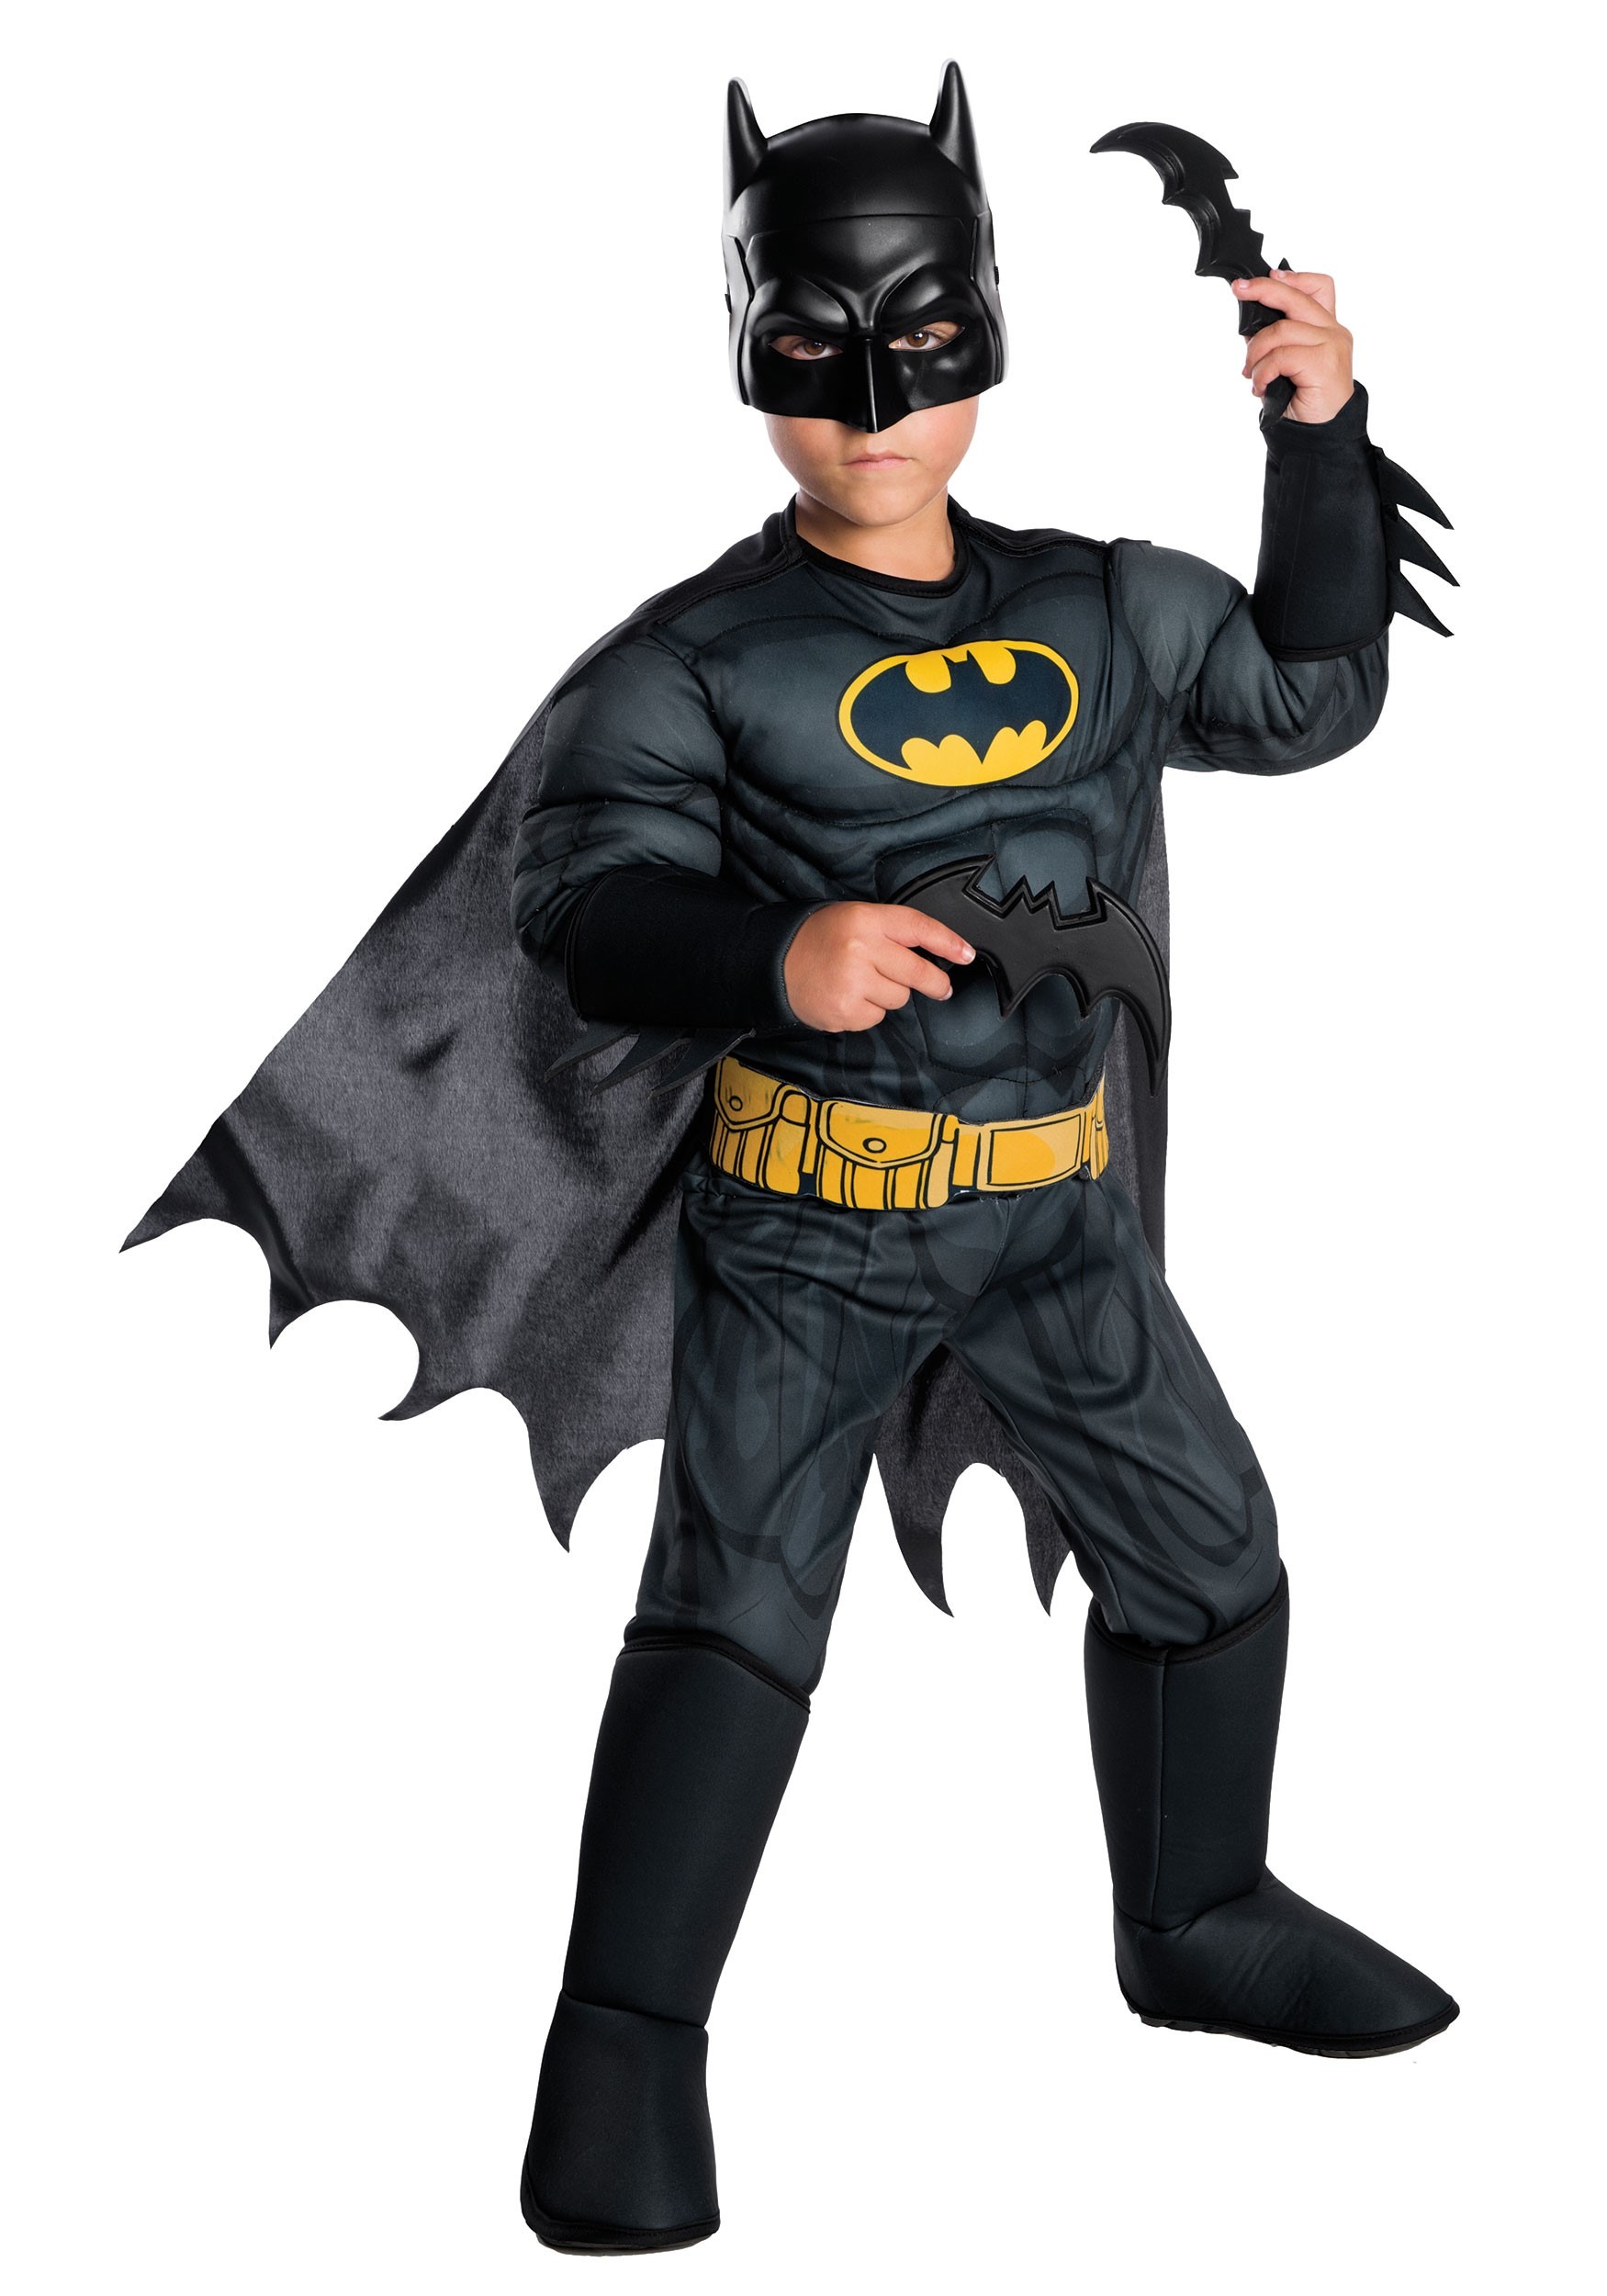 Photos - Fancy Dress Rubies Costume Co. Inc DC Comics Batman Costume for Kids Black/Gray